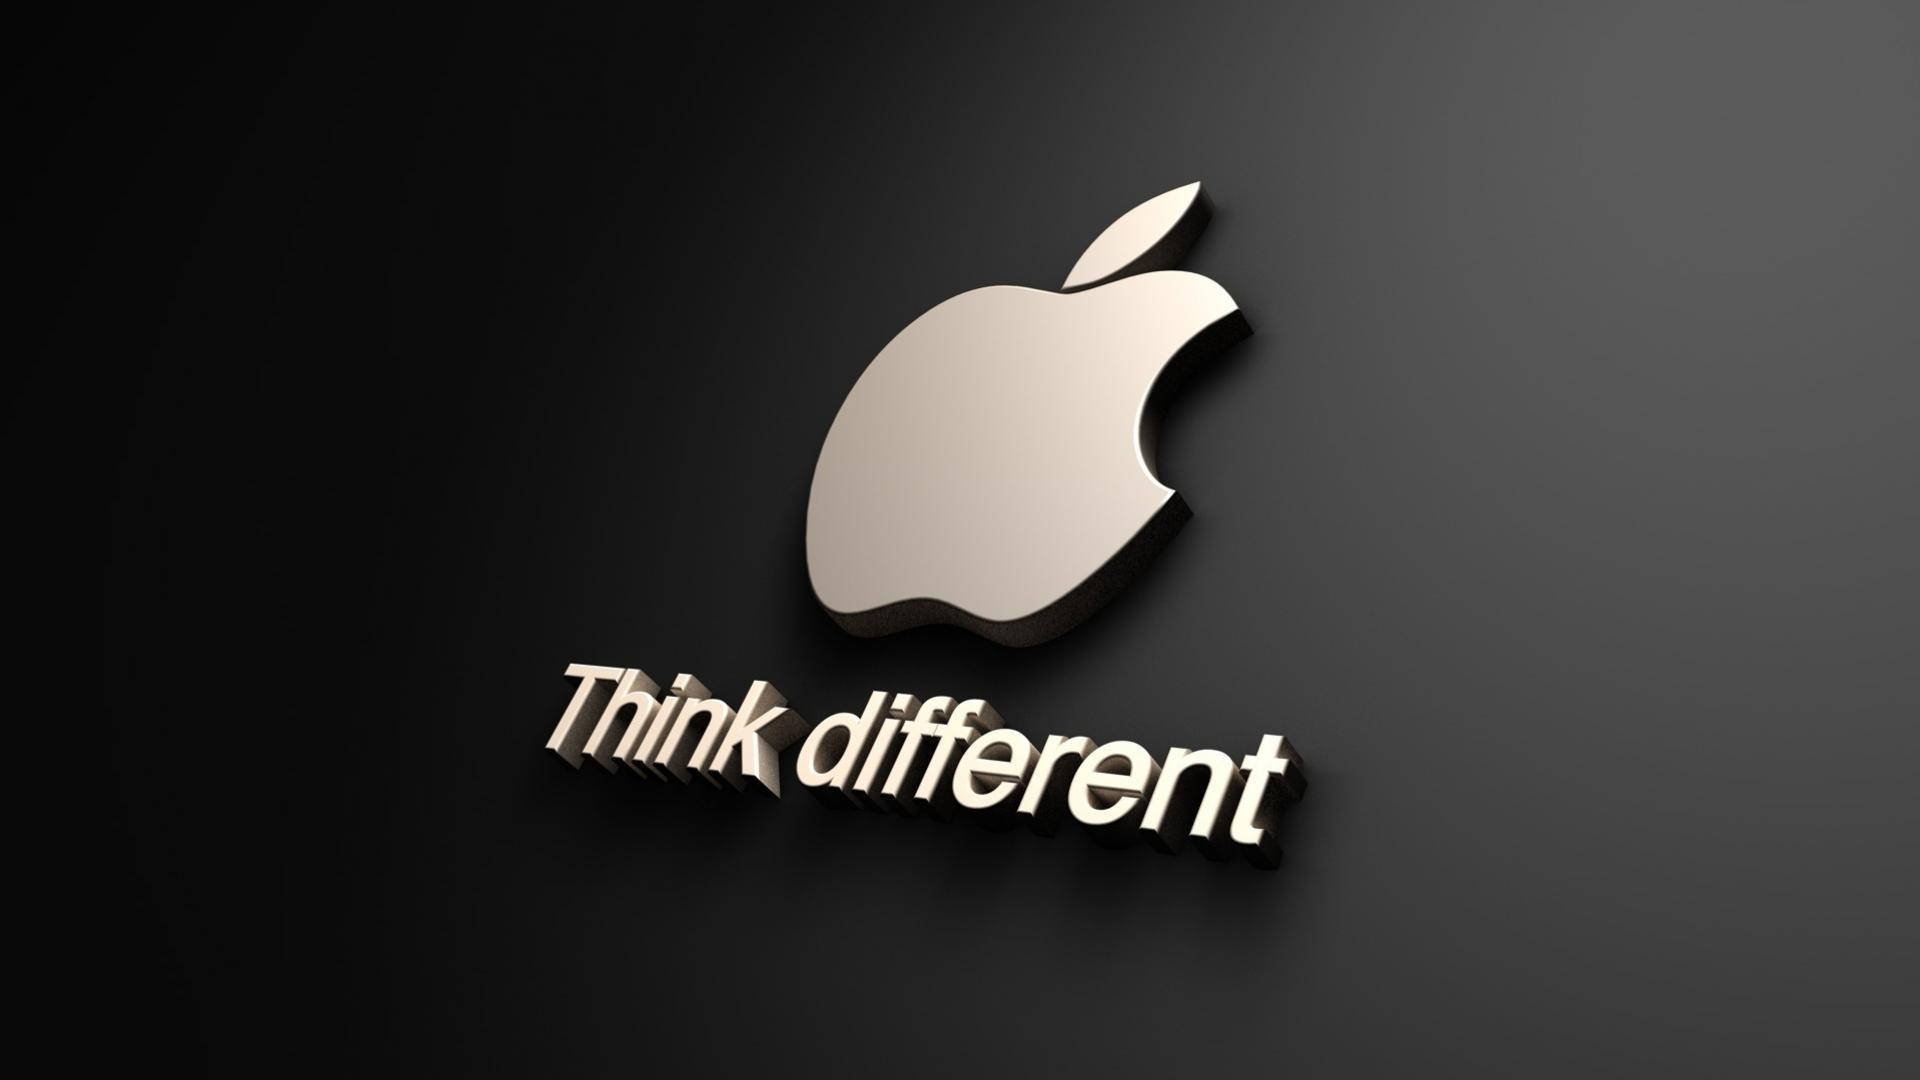 Digital Art Of Apple Logo 4k Picture